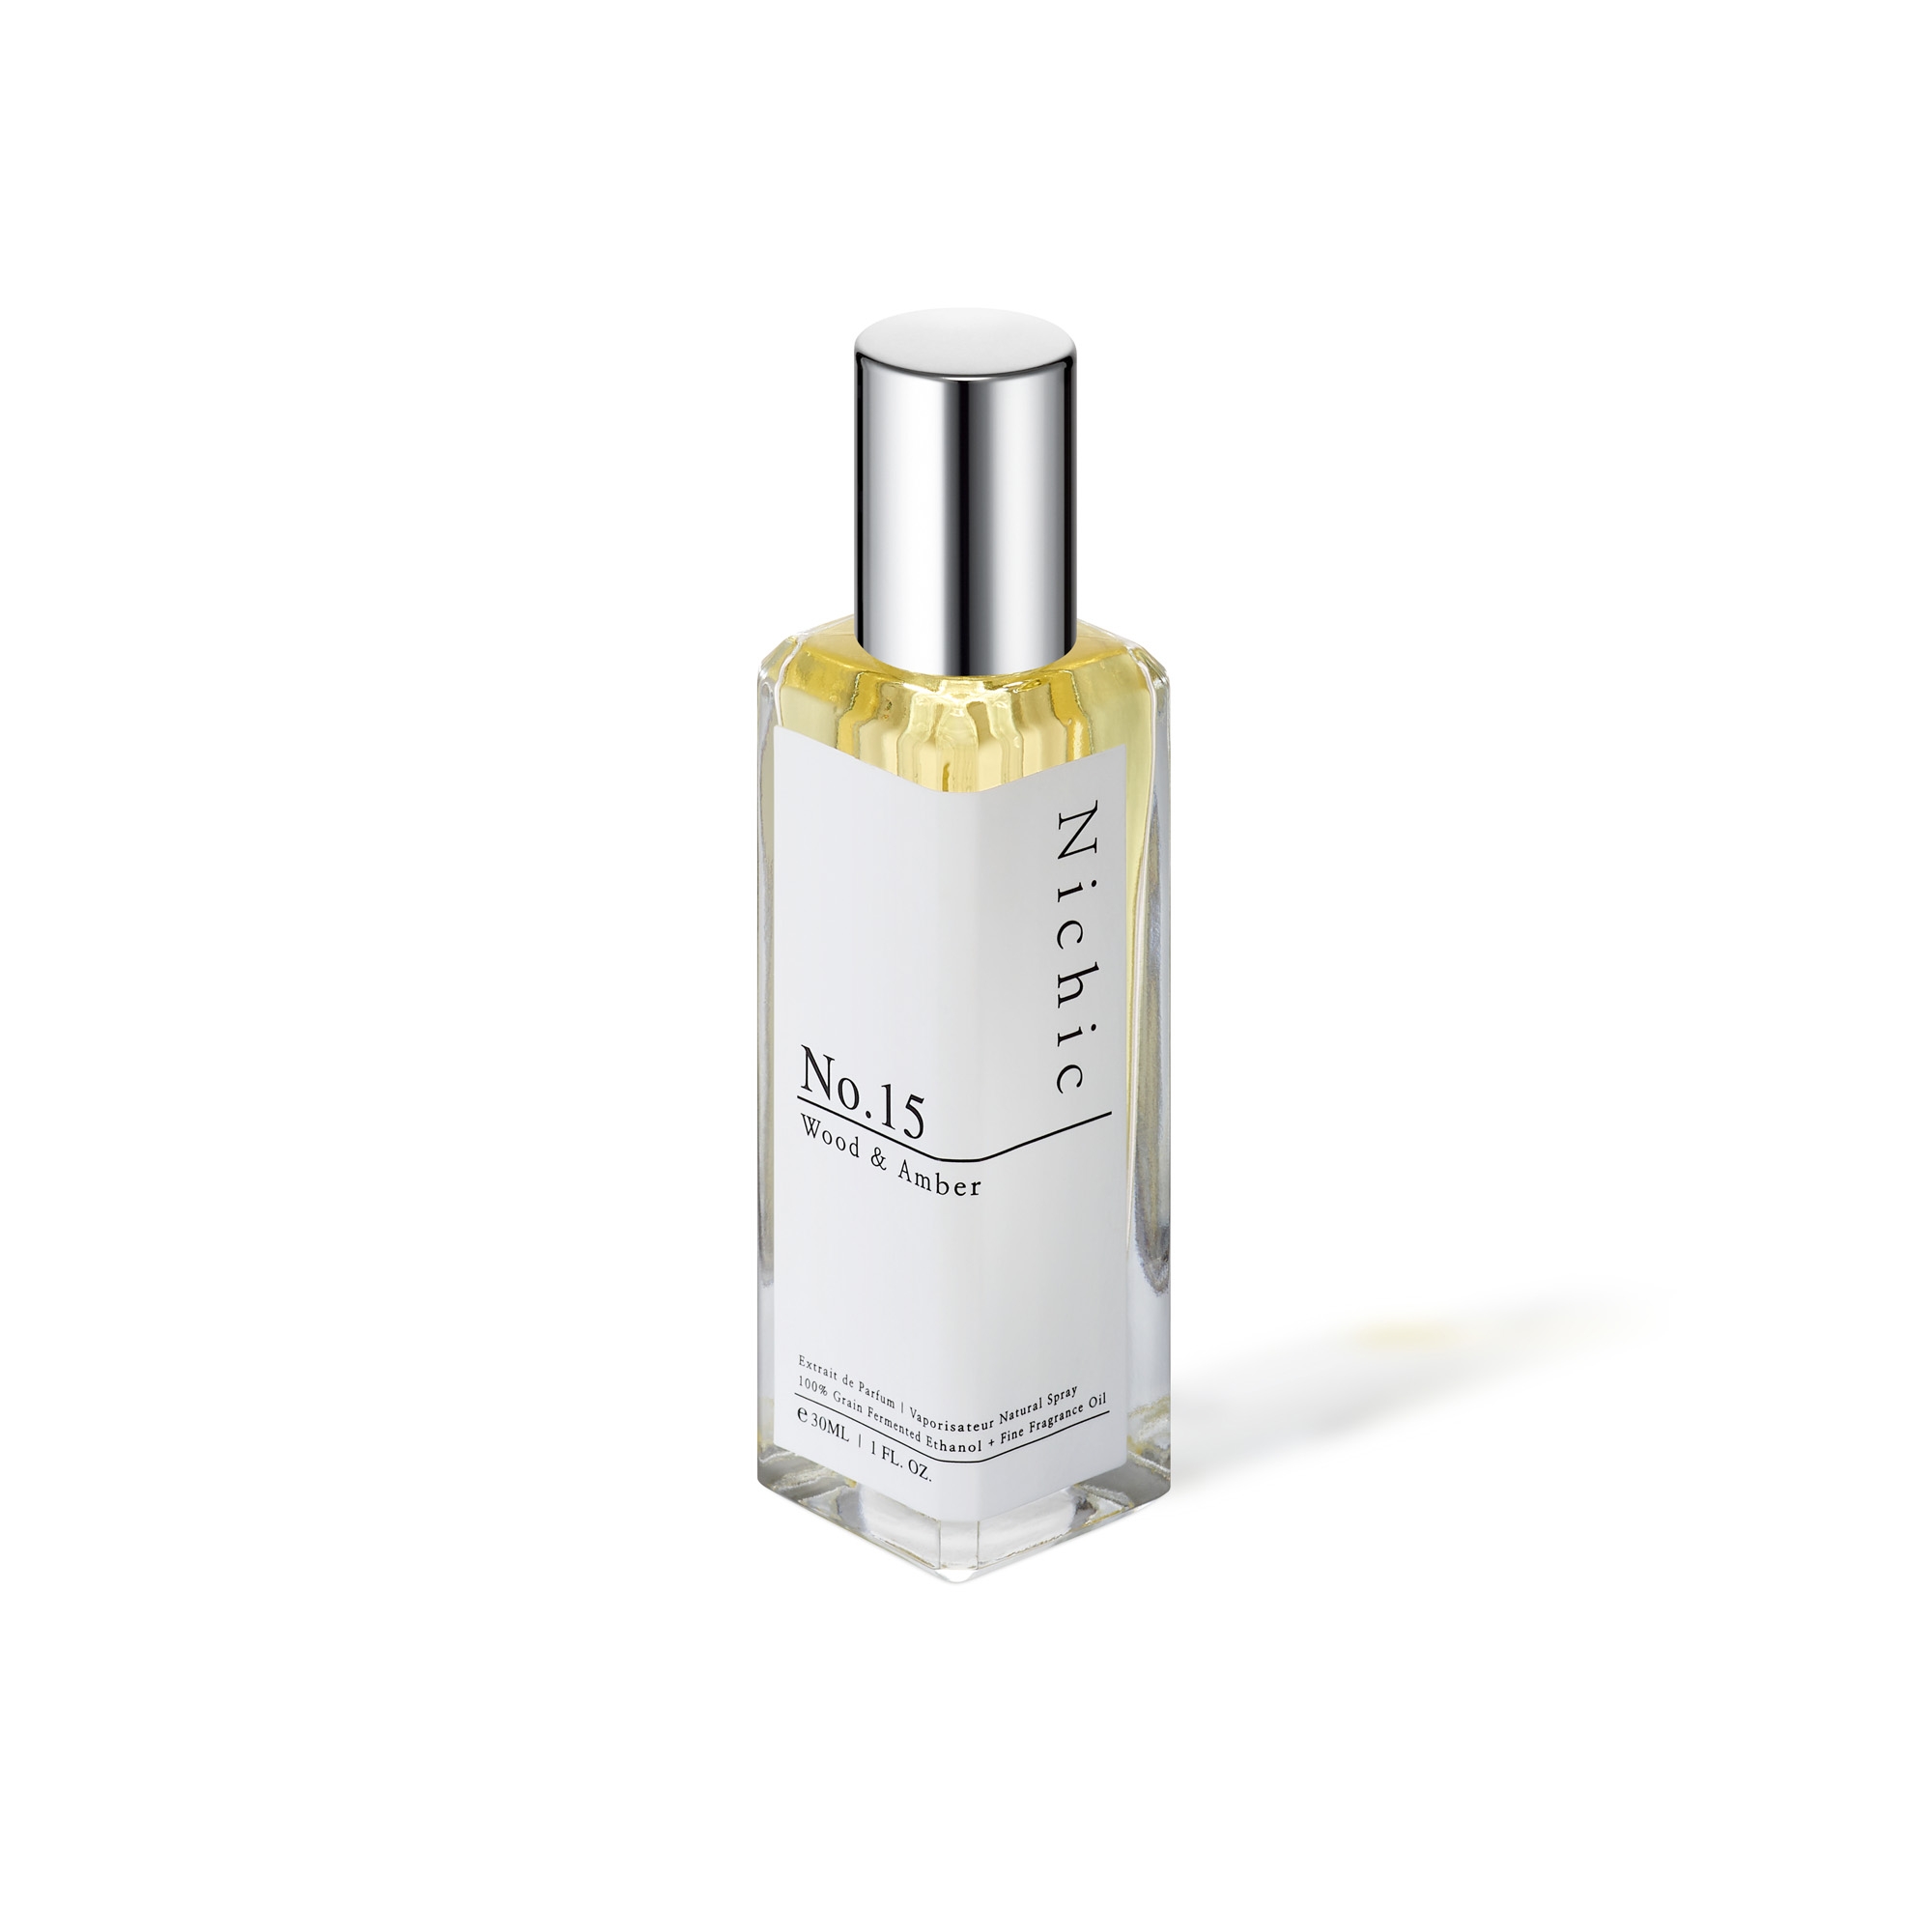 Nichic(ニチック)Extrait de Parfum【No.15】Wood & Amber - 30mL